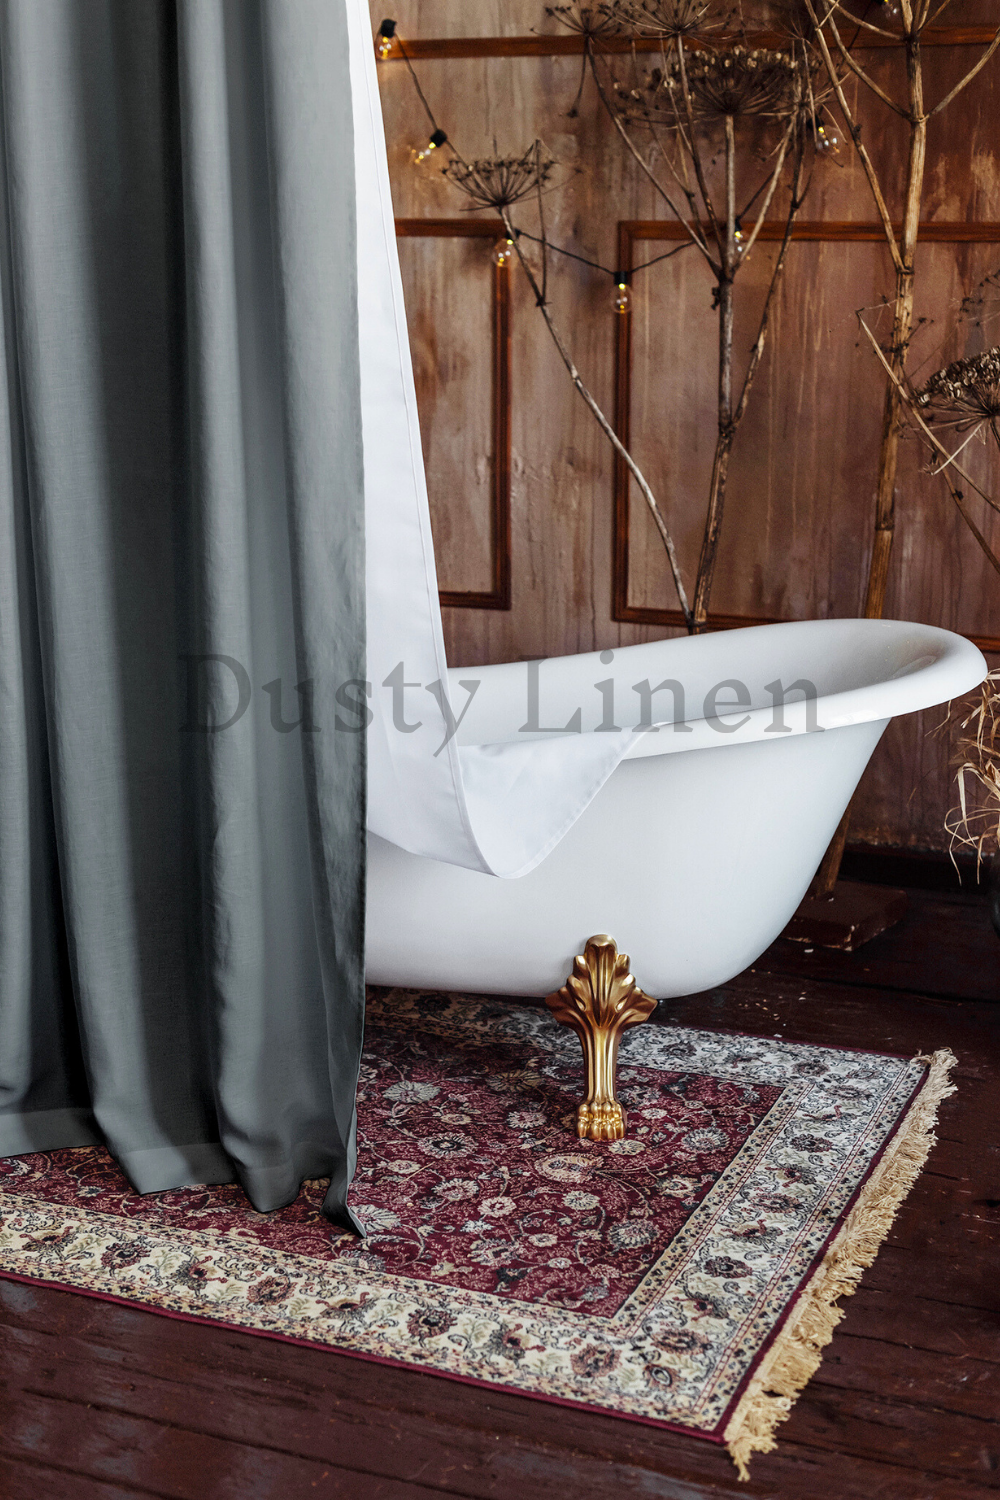 Bathroom decore with DustyLinen gray color custom shower curtain.